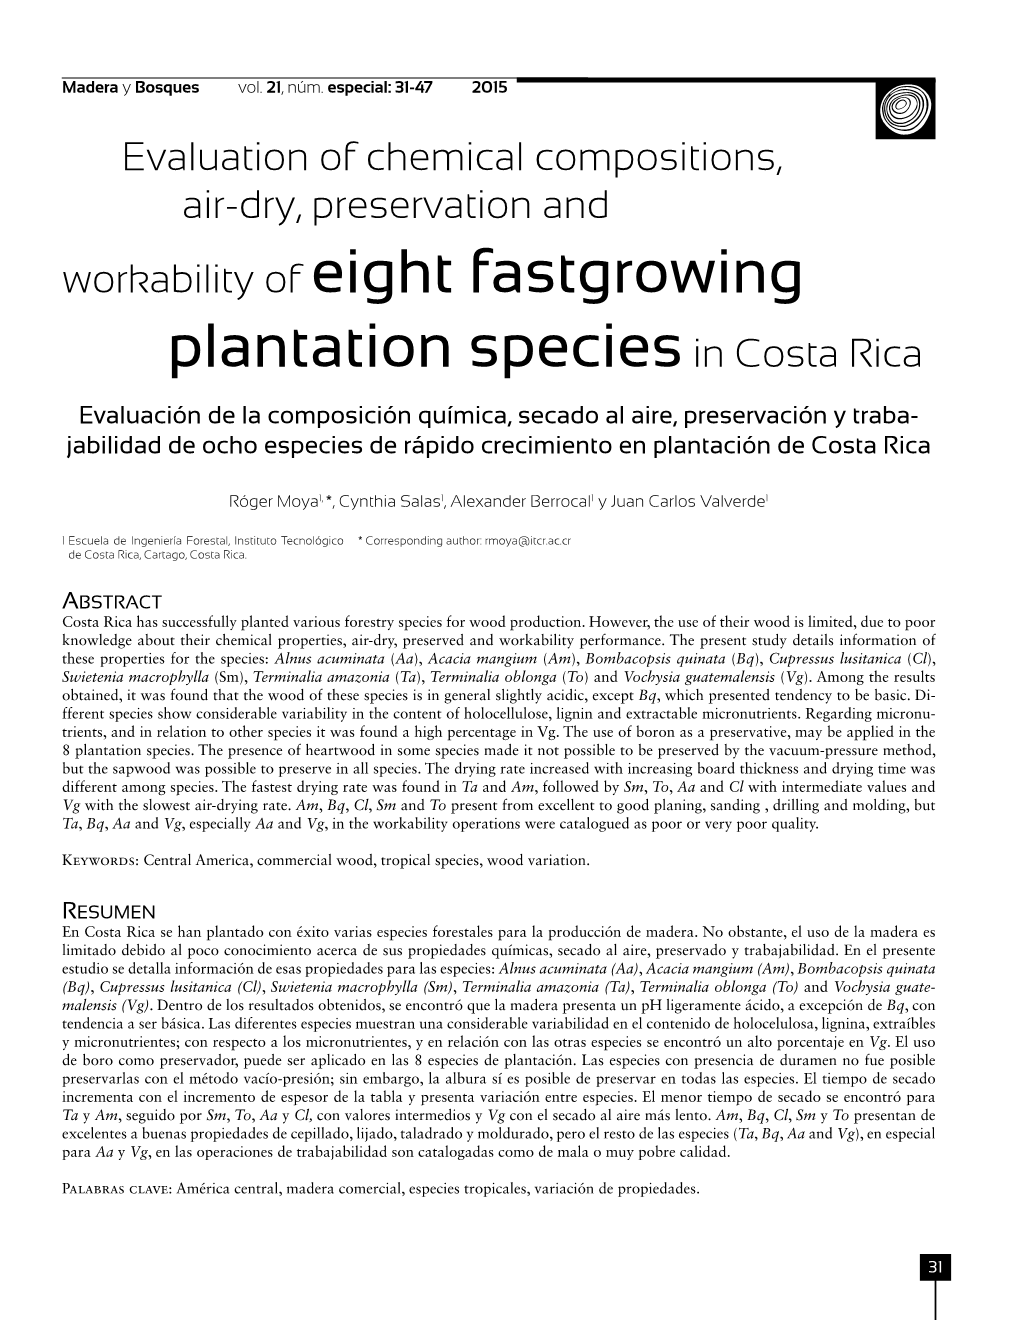 Workability of Eight Fastgrowing Plantation Speciesin Costa Rica